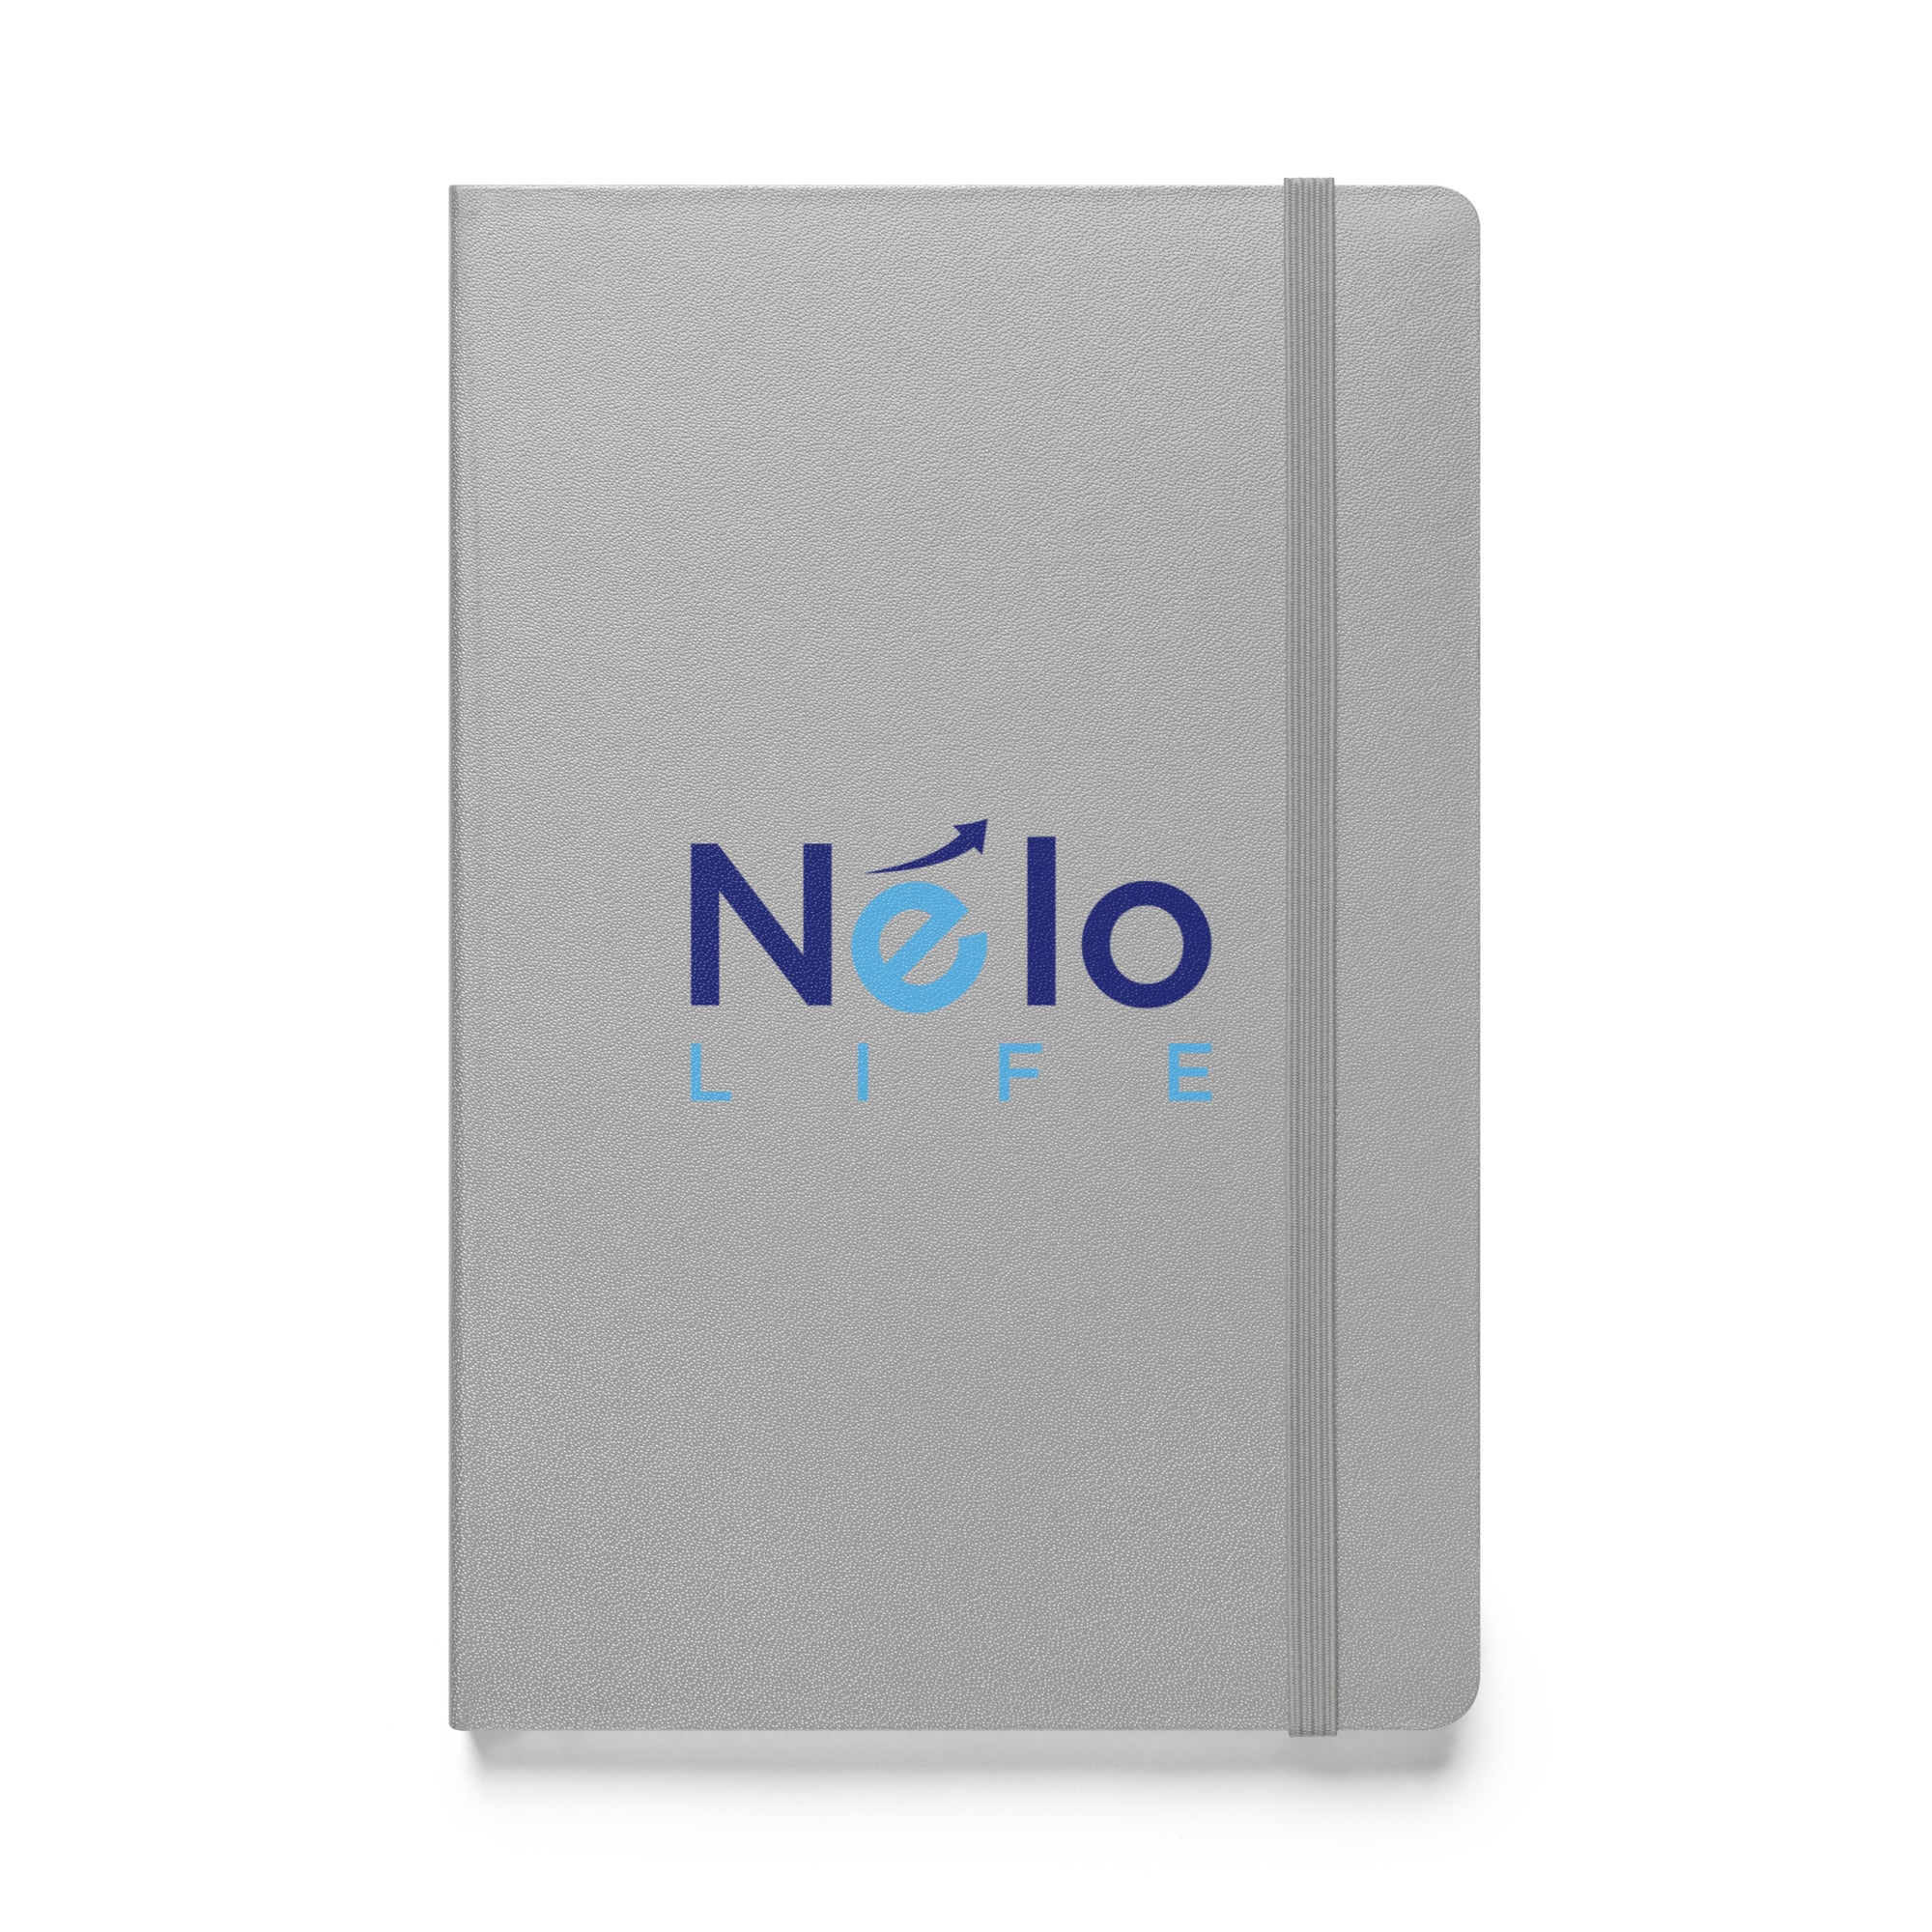 NELO LIFE hardcover bound notebook